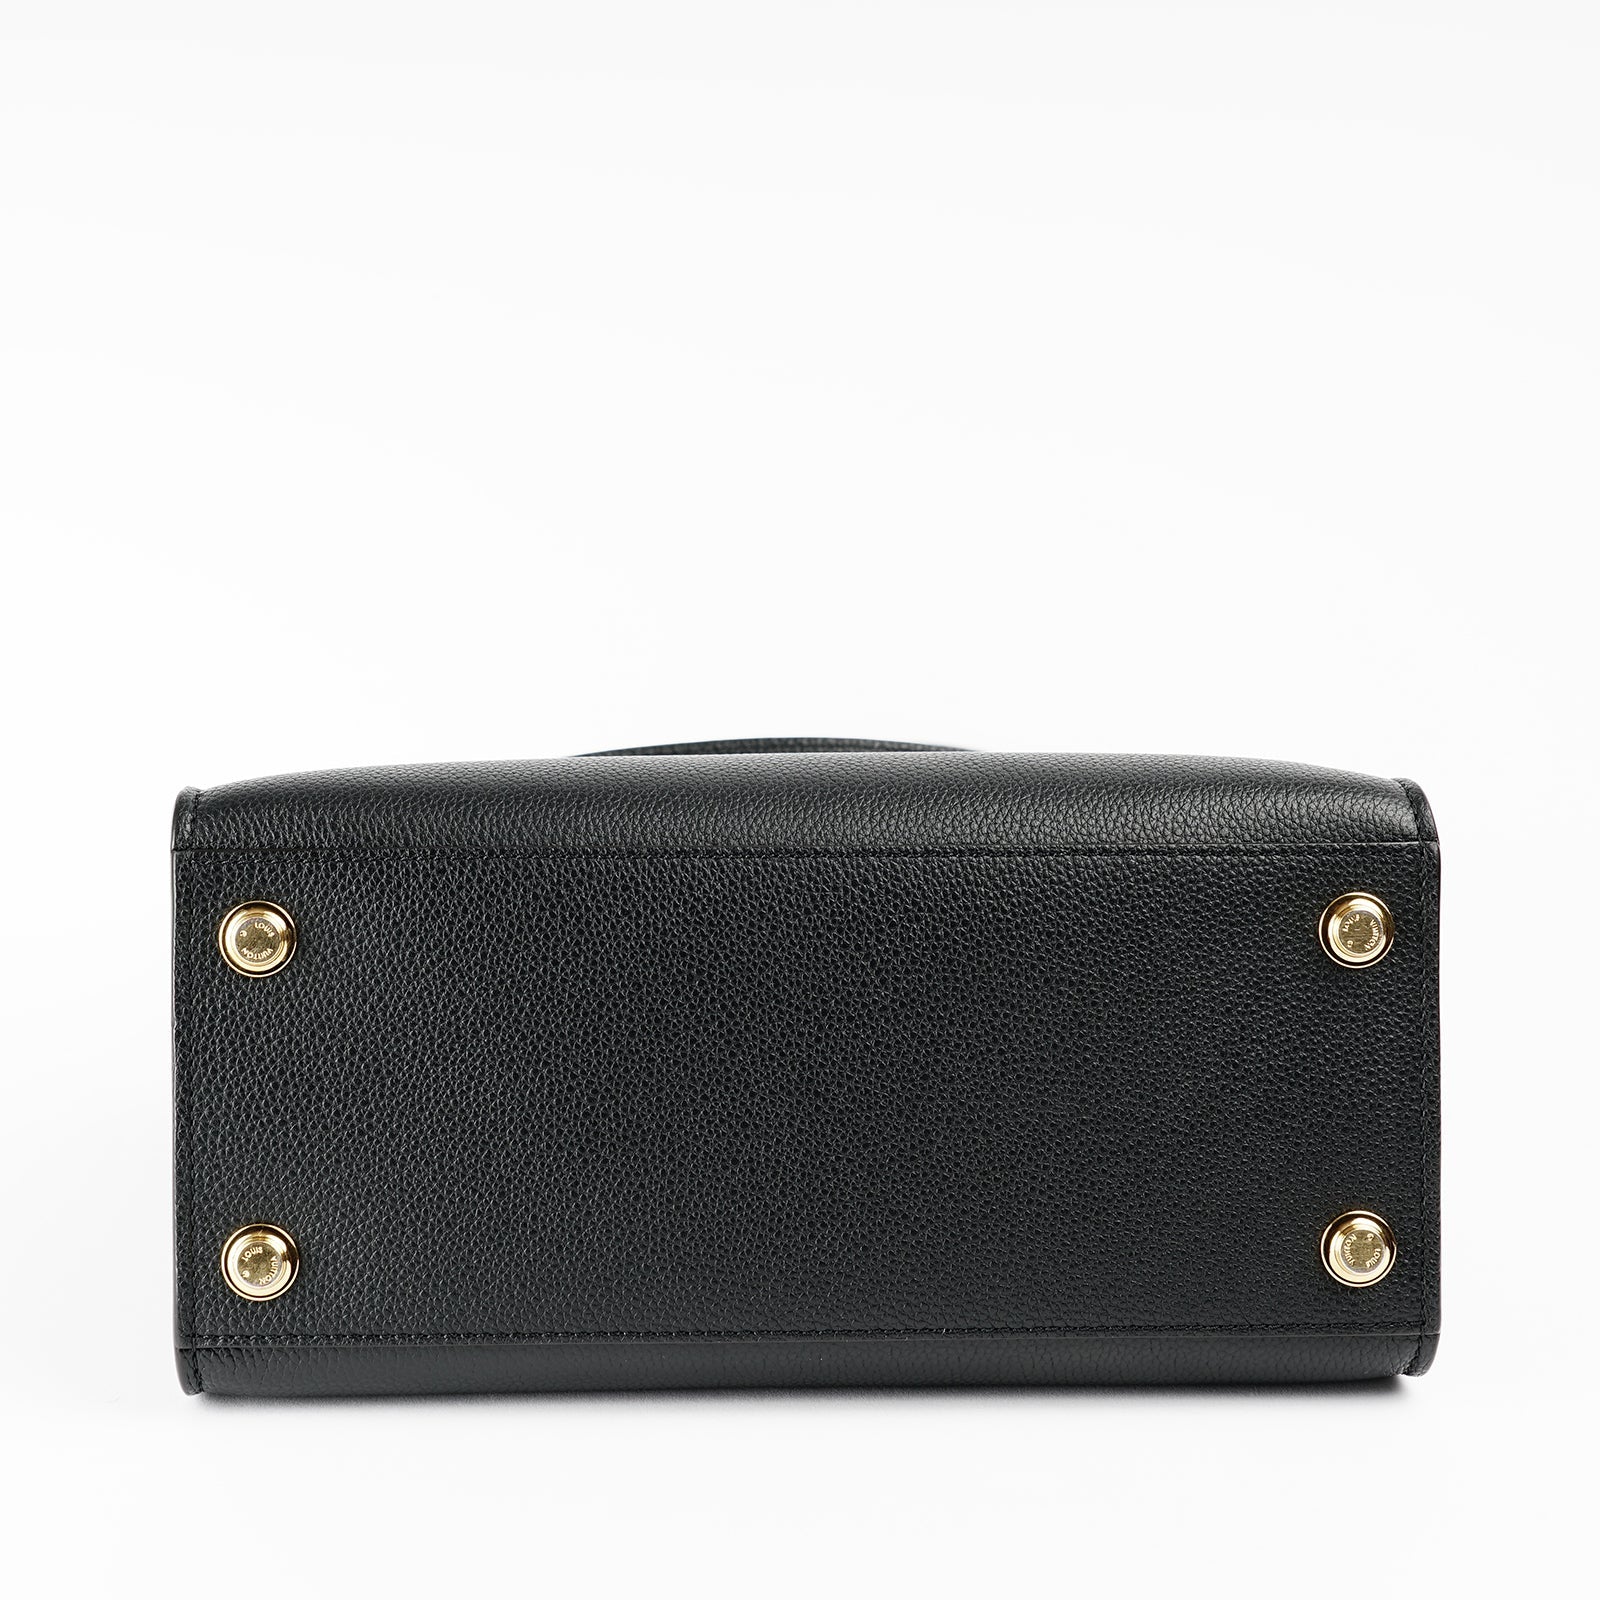 City Steamer PM Handbag - Affordable Luxury image